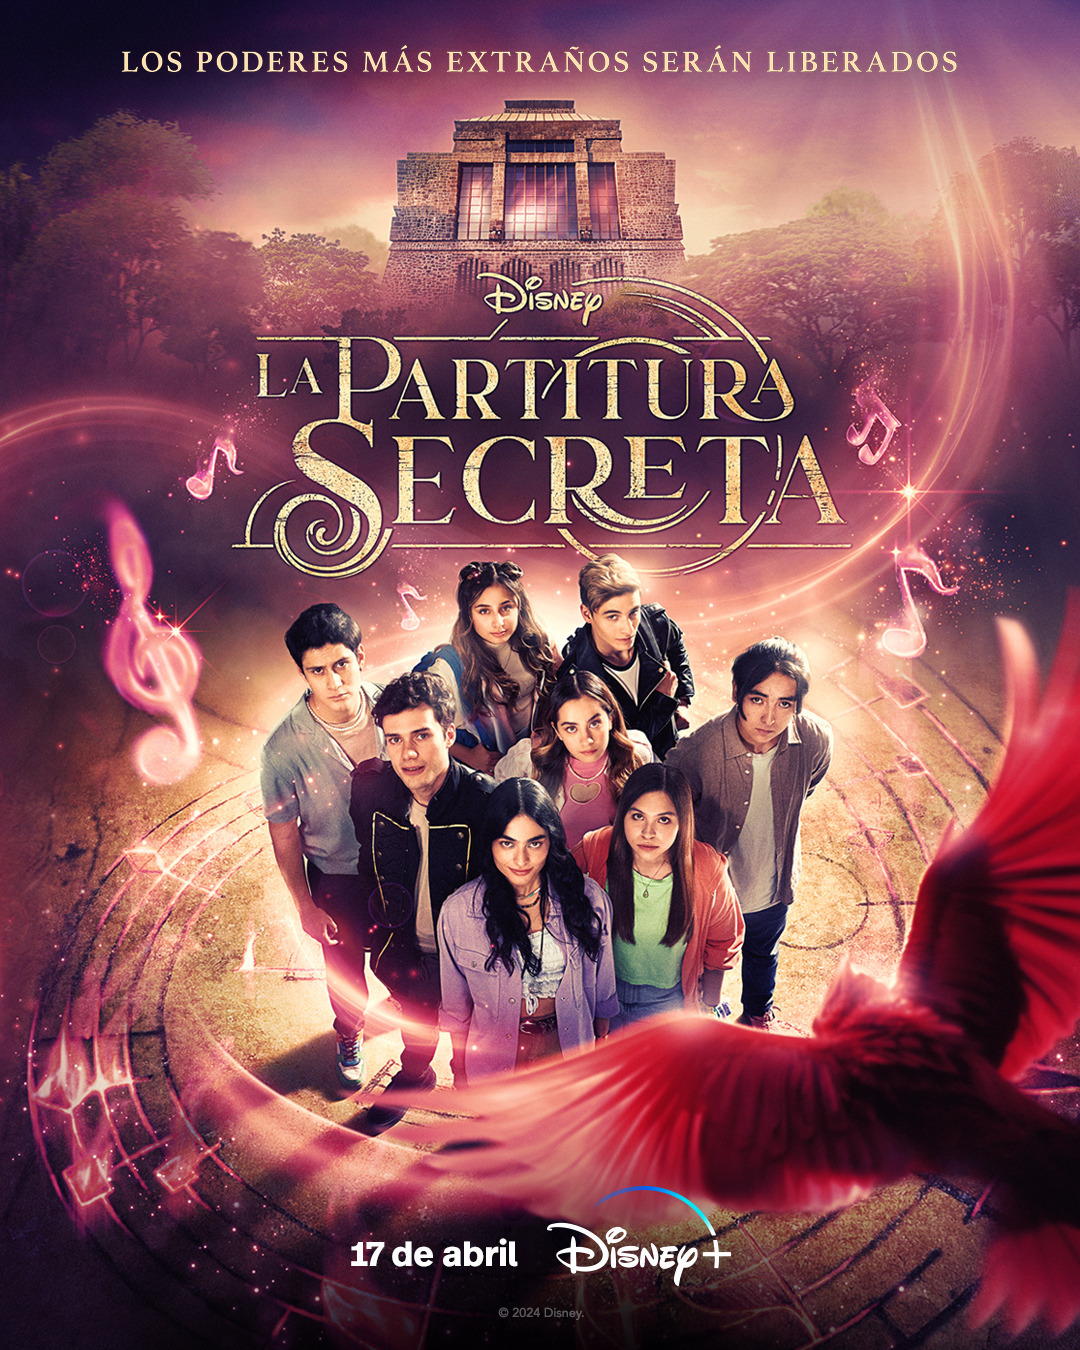 Extra Large TV Poster Image for La partitura secreta (#1 of 7)